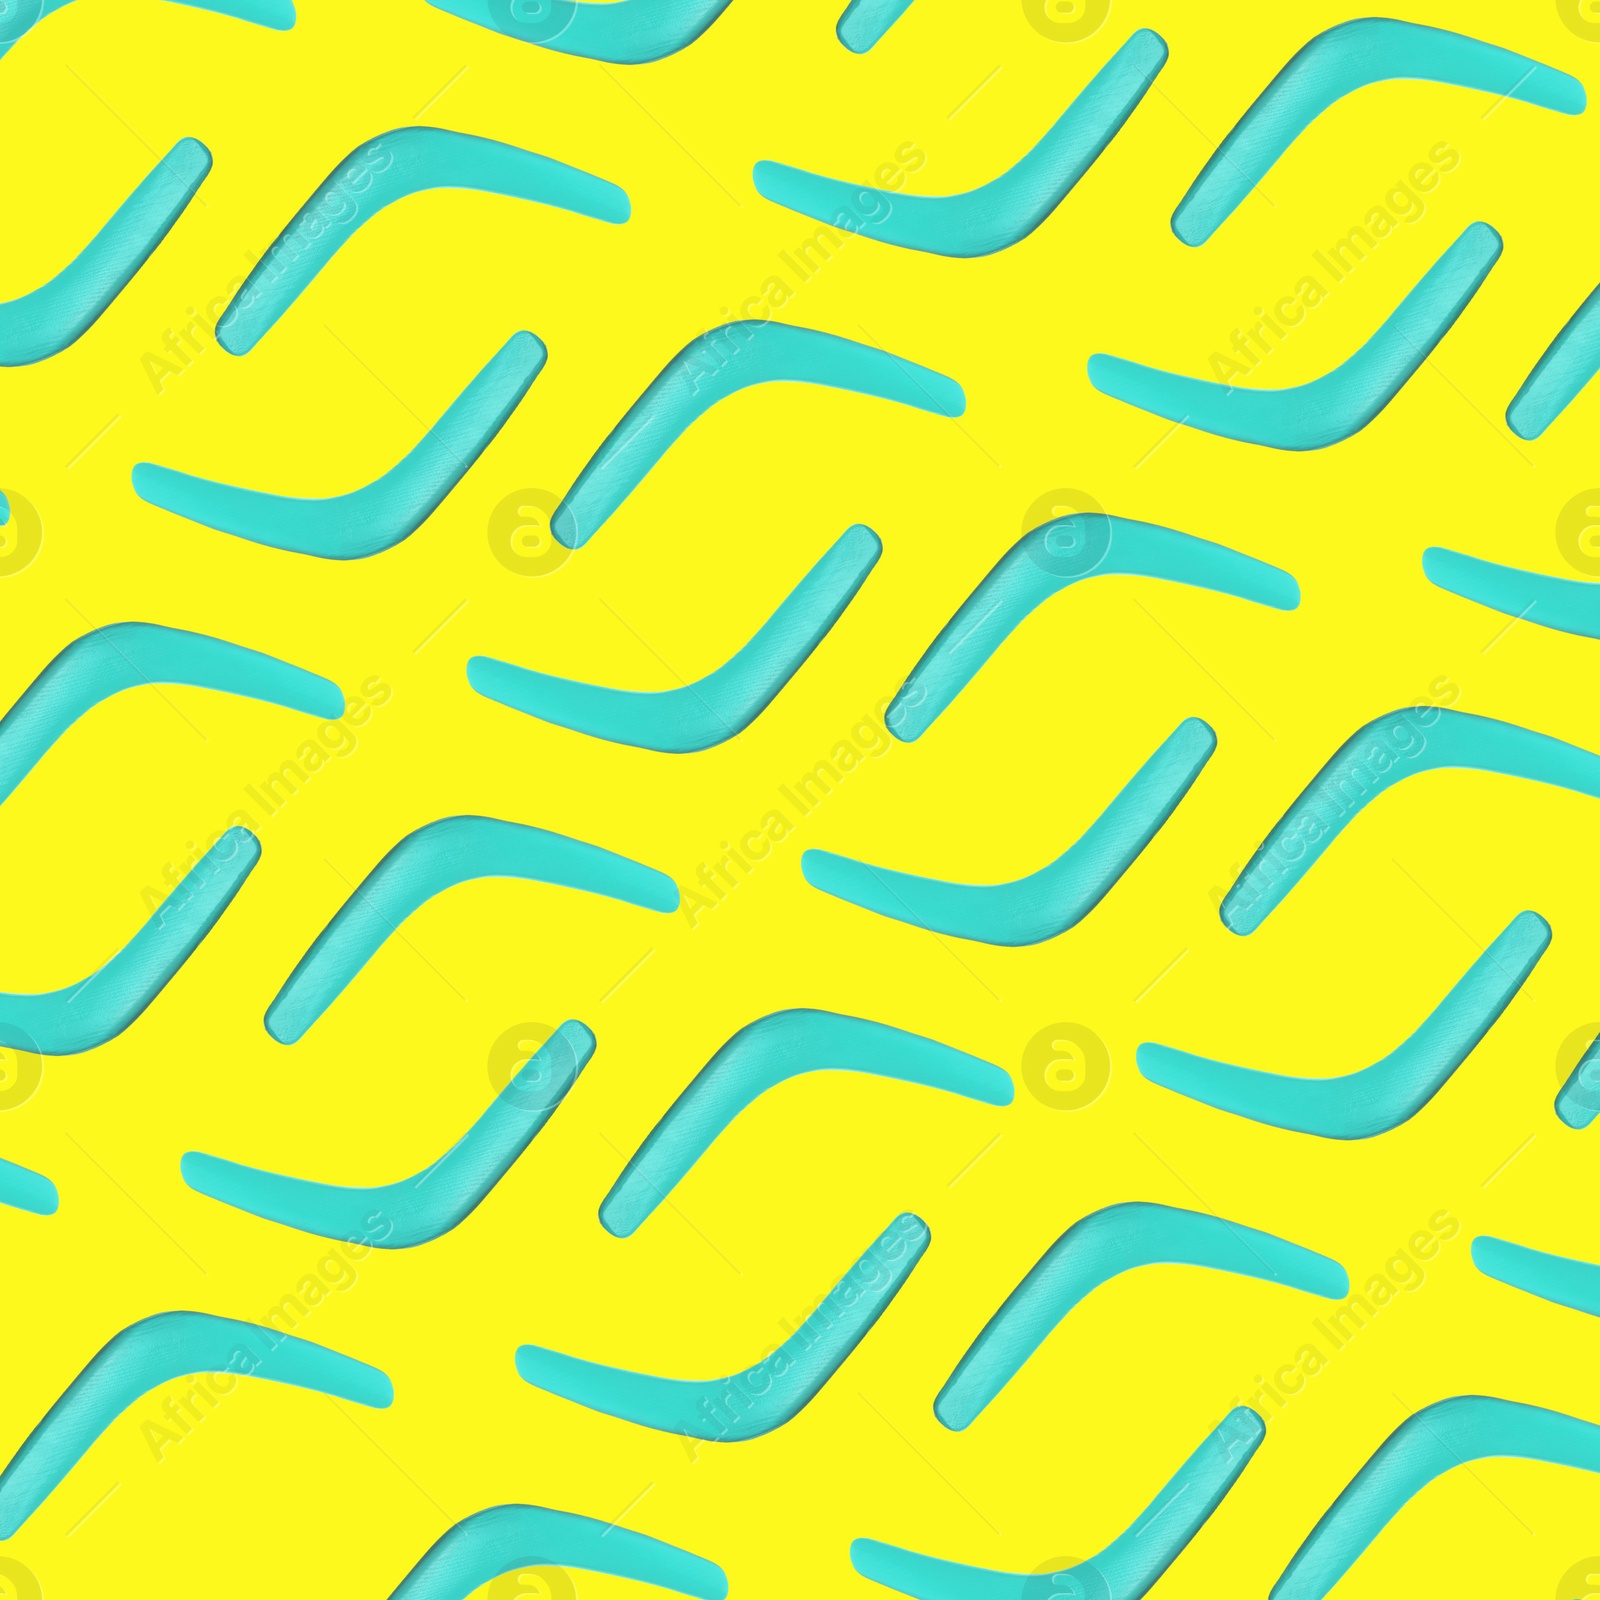 Image of Turquoise boomerangs on yellow background, flat lay